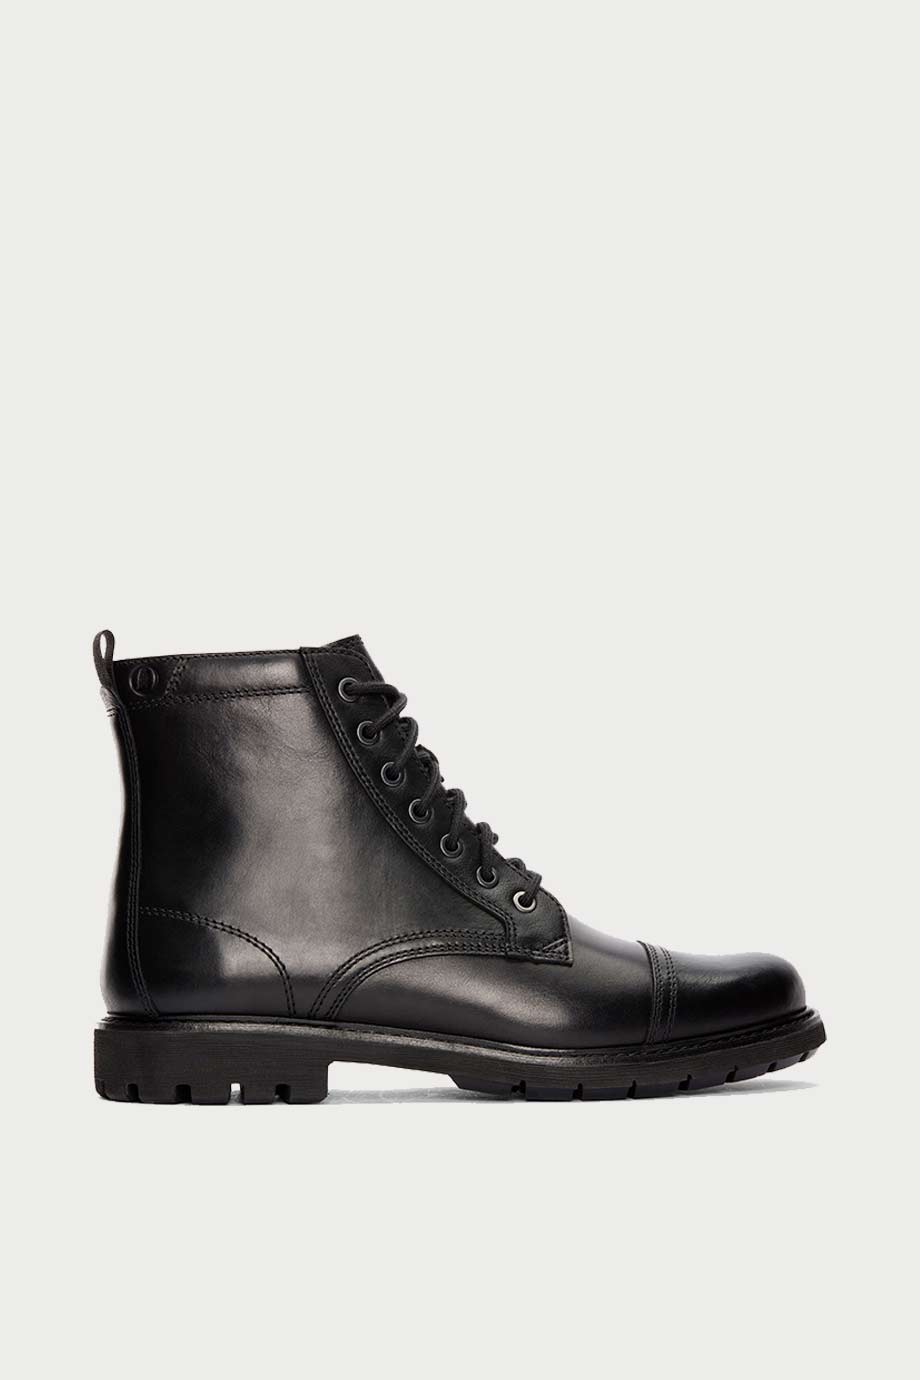 spiridoula metheniti shoes xalkida batcomebe cap black leather clarks 1p